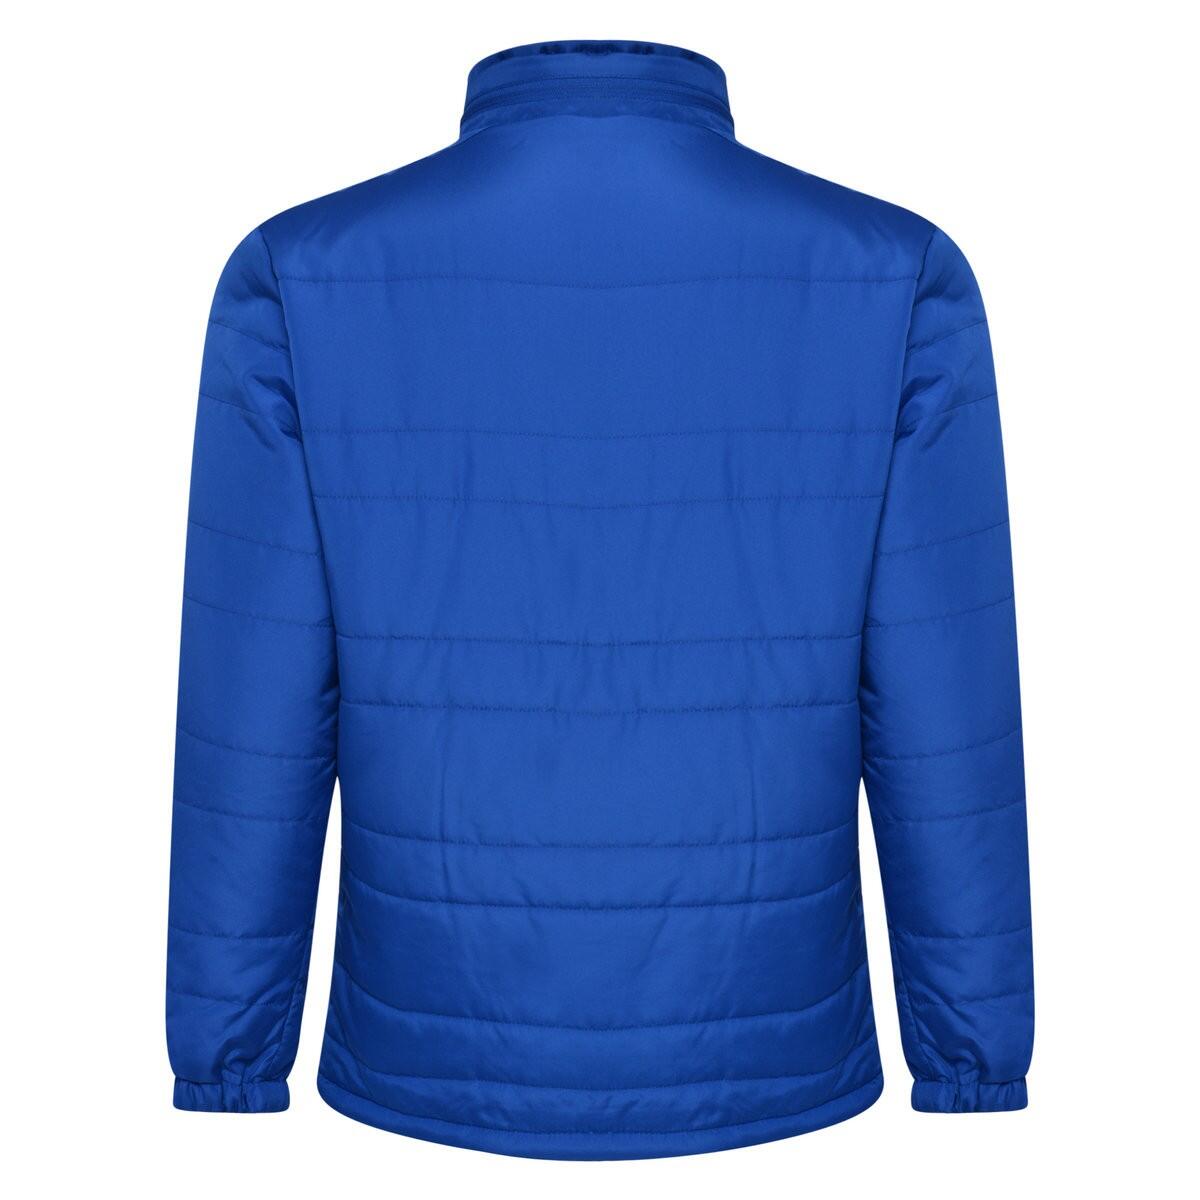 Mens Club Essential Bench Jacket (Royal Blue) 2/3